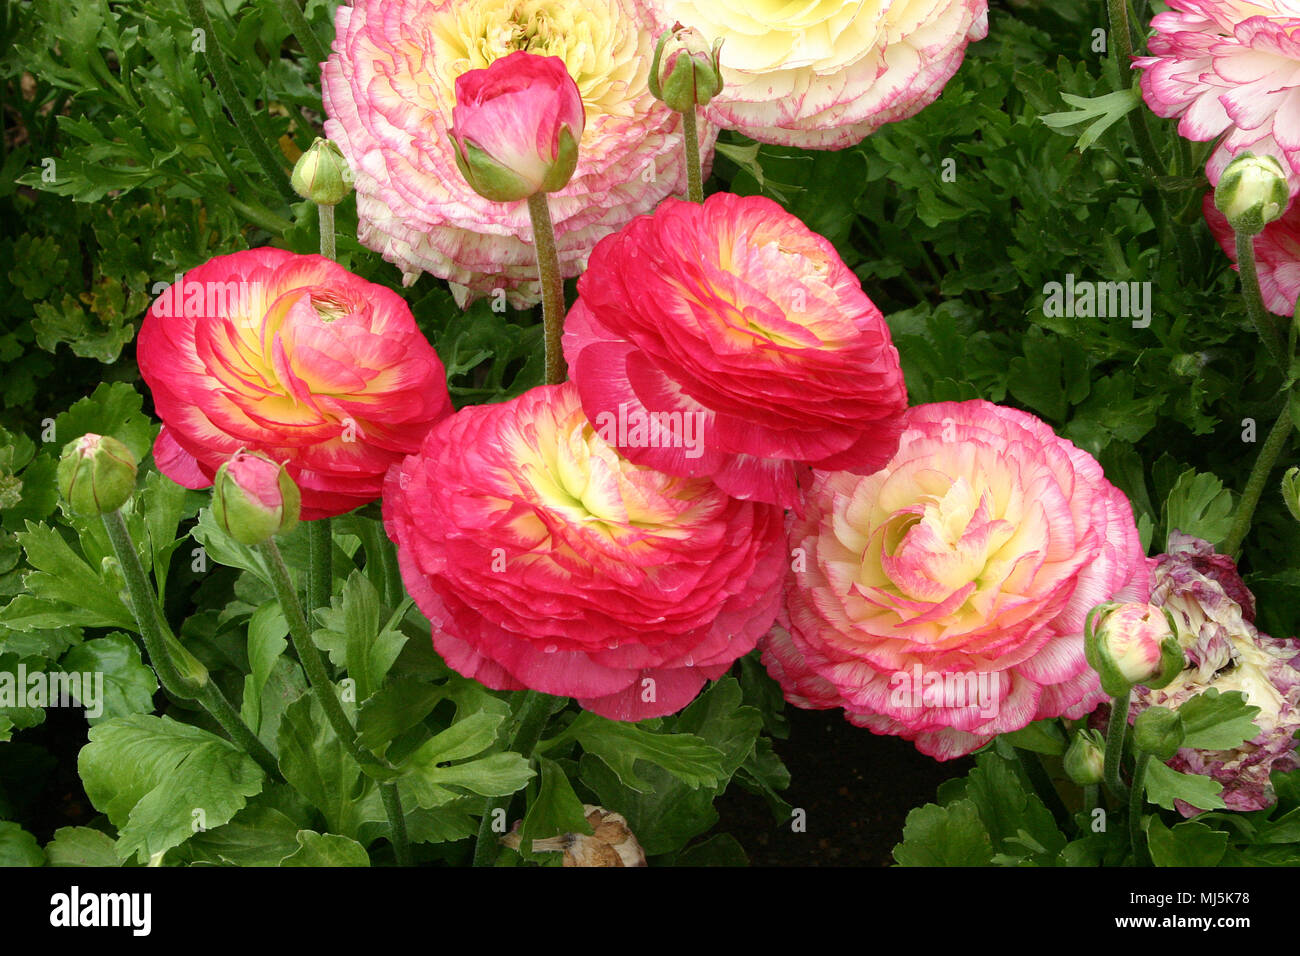 BEAUTIFUL RANUNCULUS FLOWERS IN FULL BLOOM Stock Photo